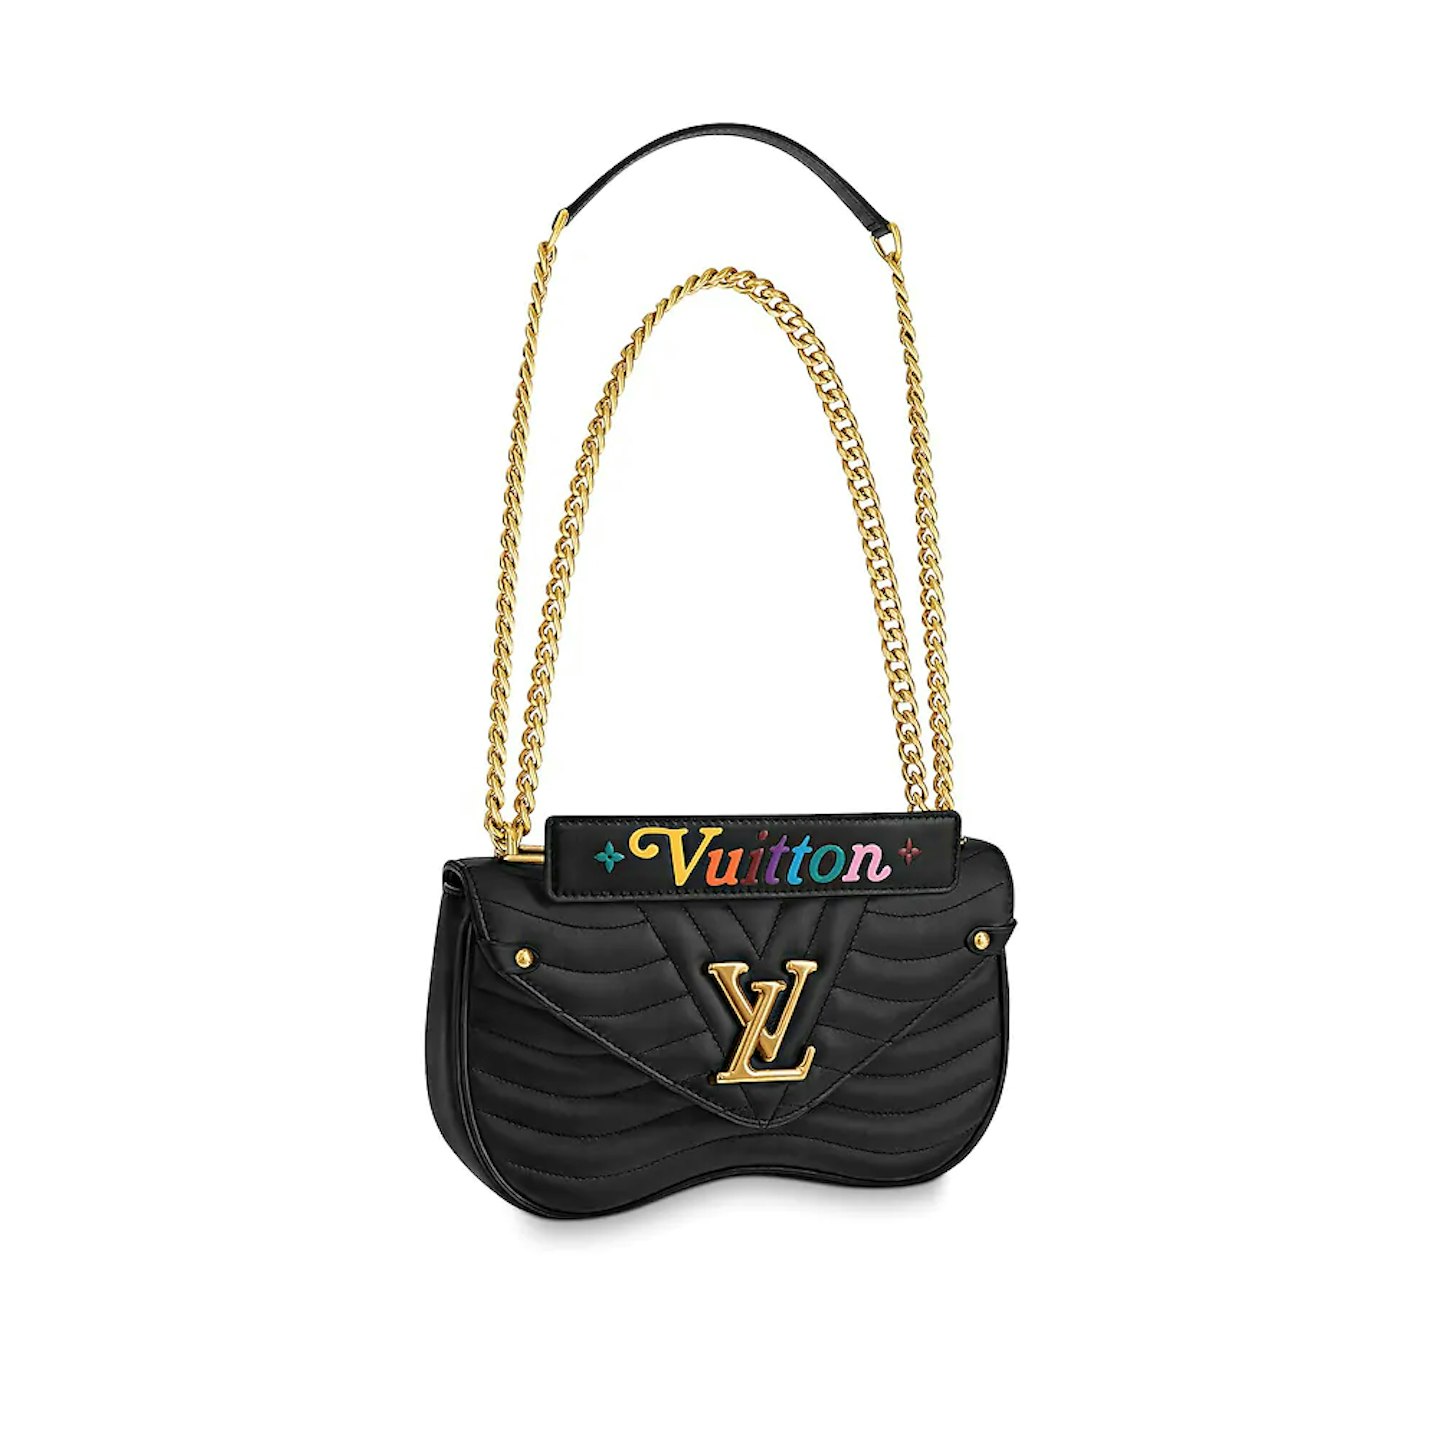 Rihanna and Selena Gomez with the Louis Vuitton Monogram Bag